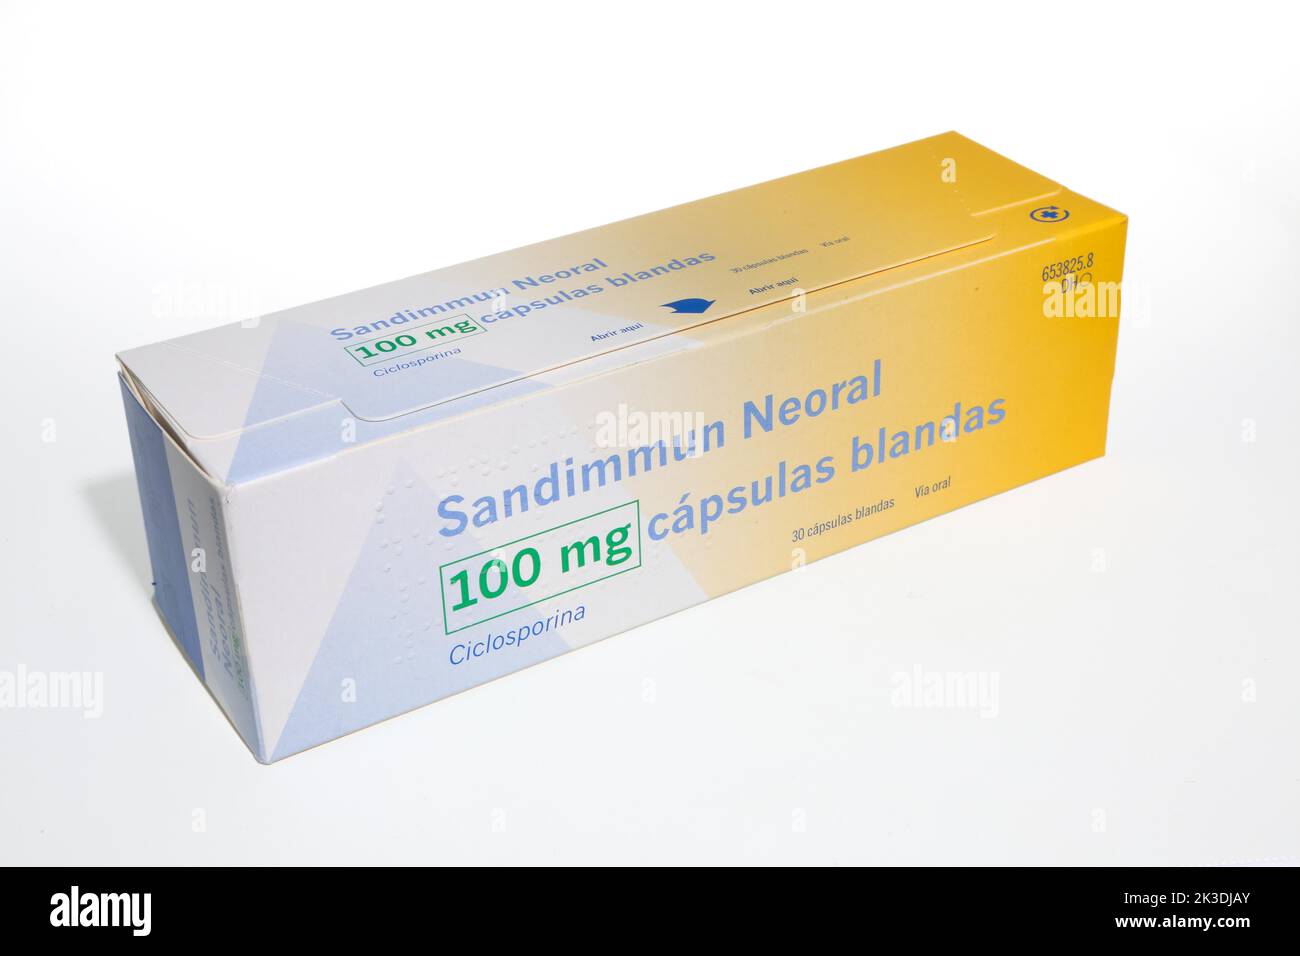 SANDIMMUN NEORAL 100 mg Stock Photo